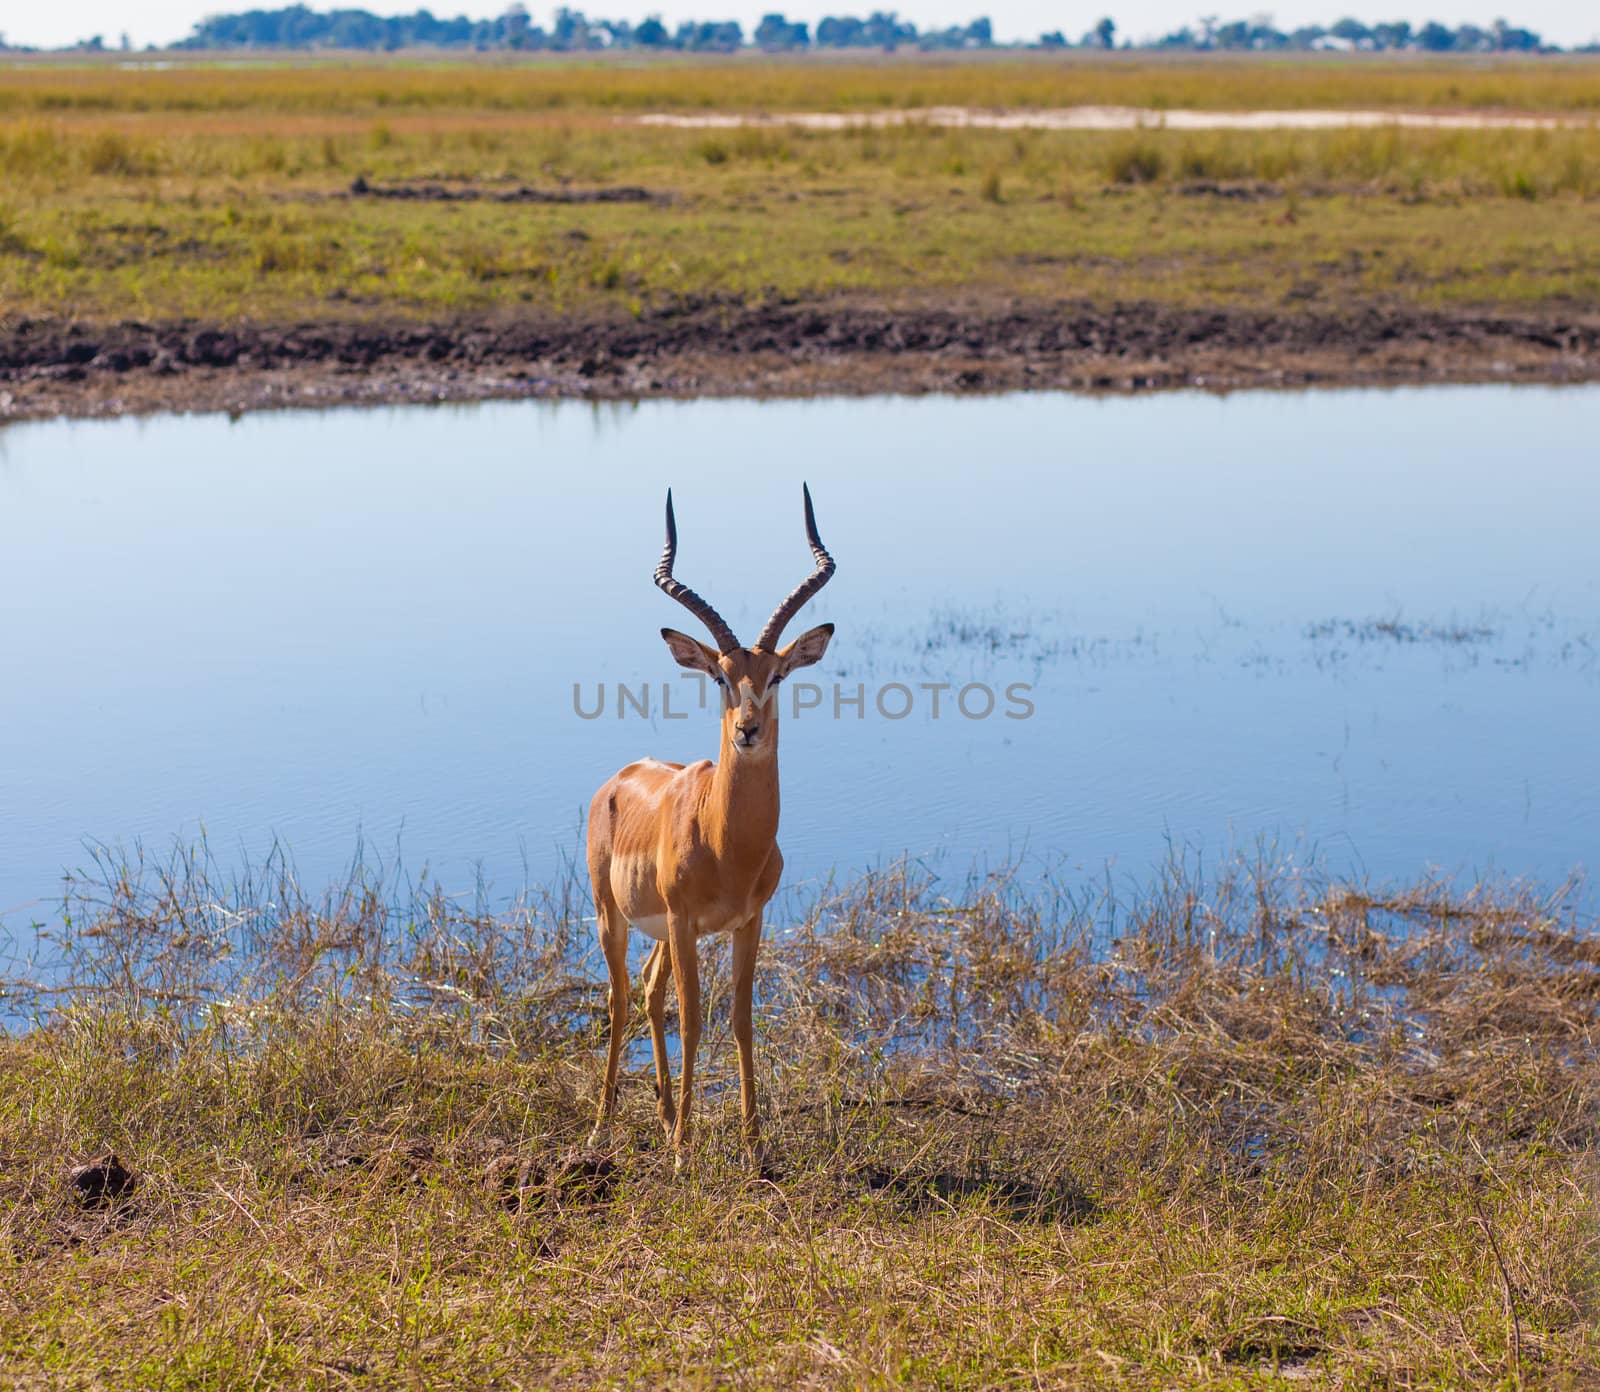 Impala (Aepyceros melampus) by edan